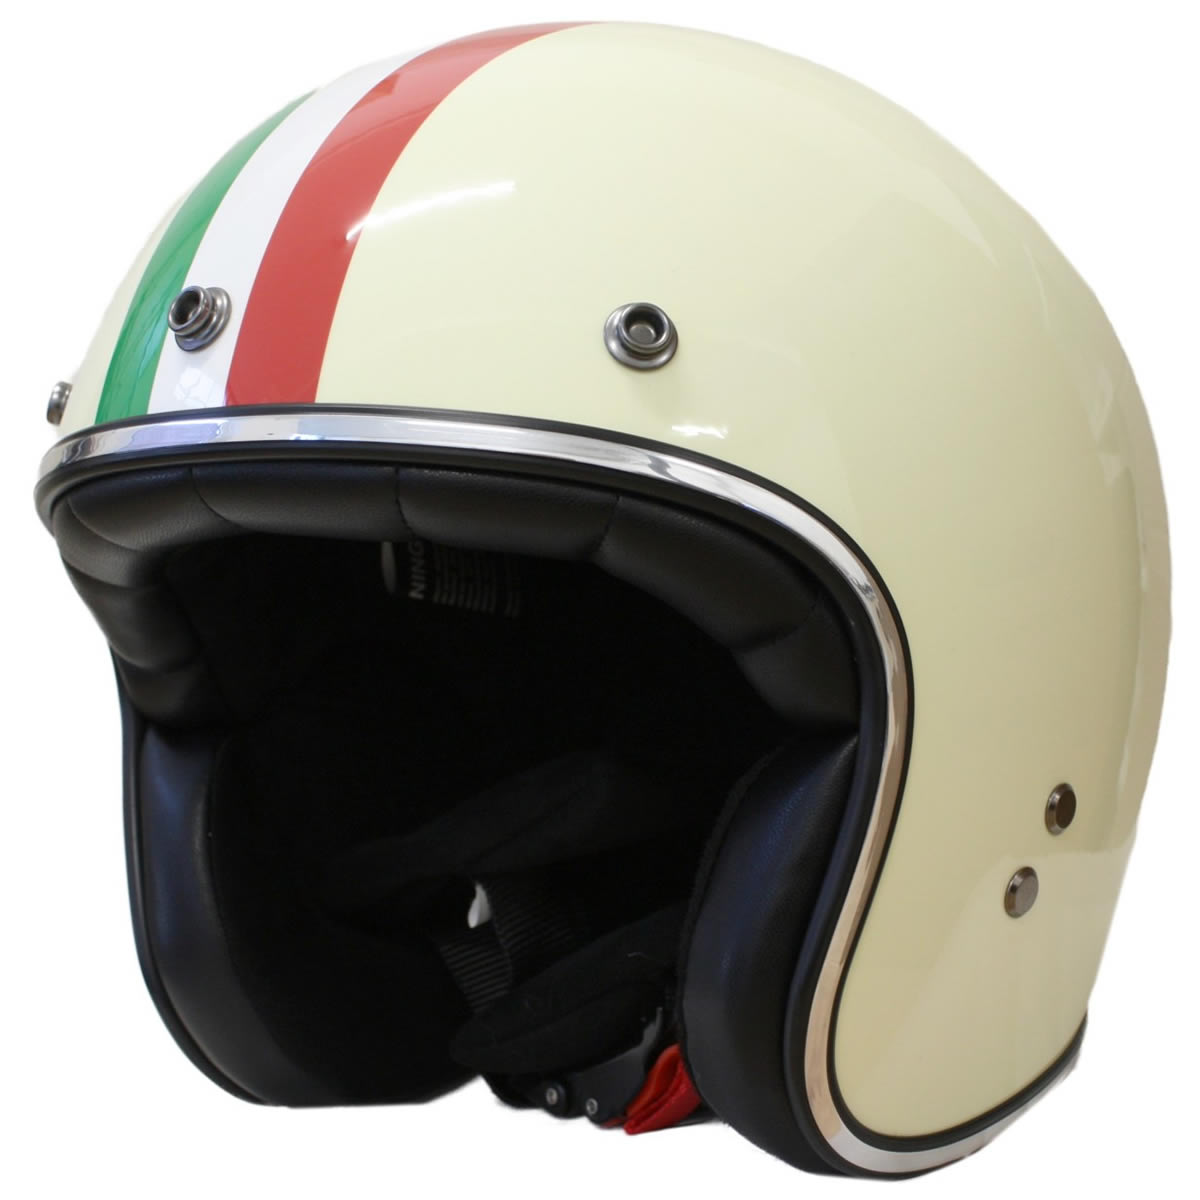 Redbike RB802 Italia Helm, elfenbein-grün-weiß-rot